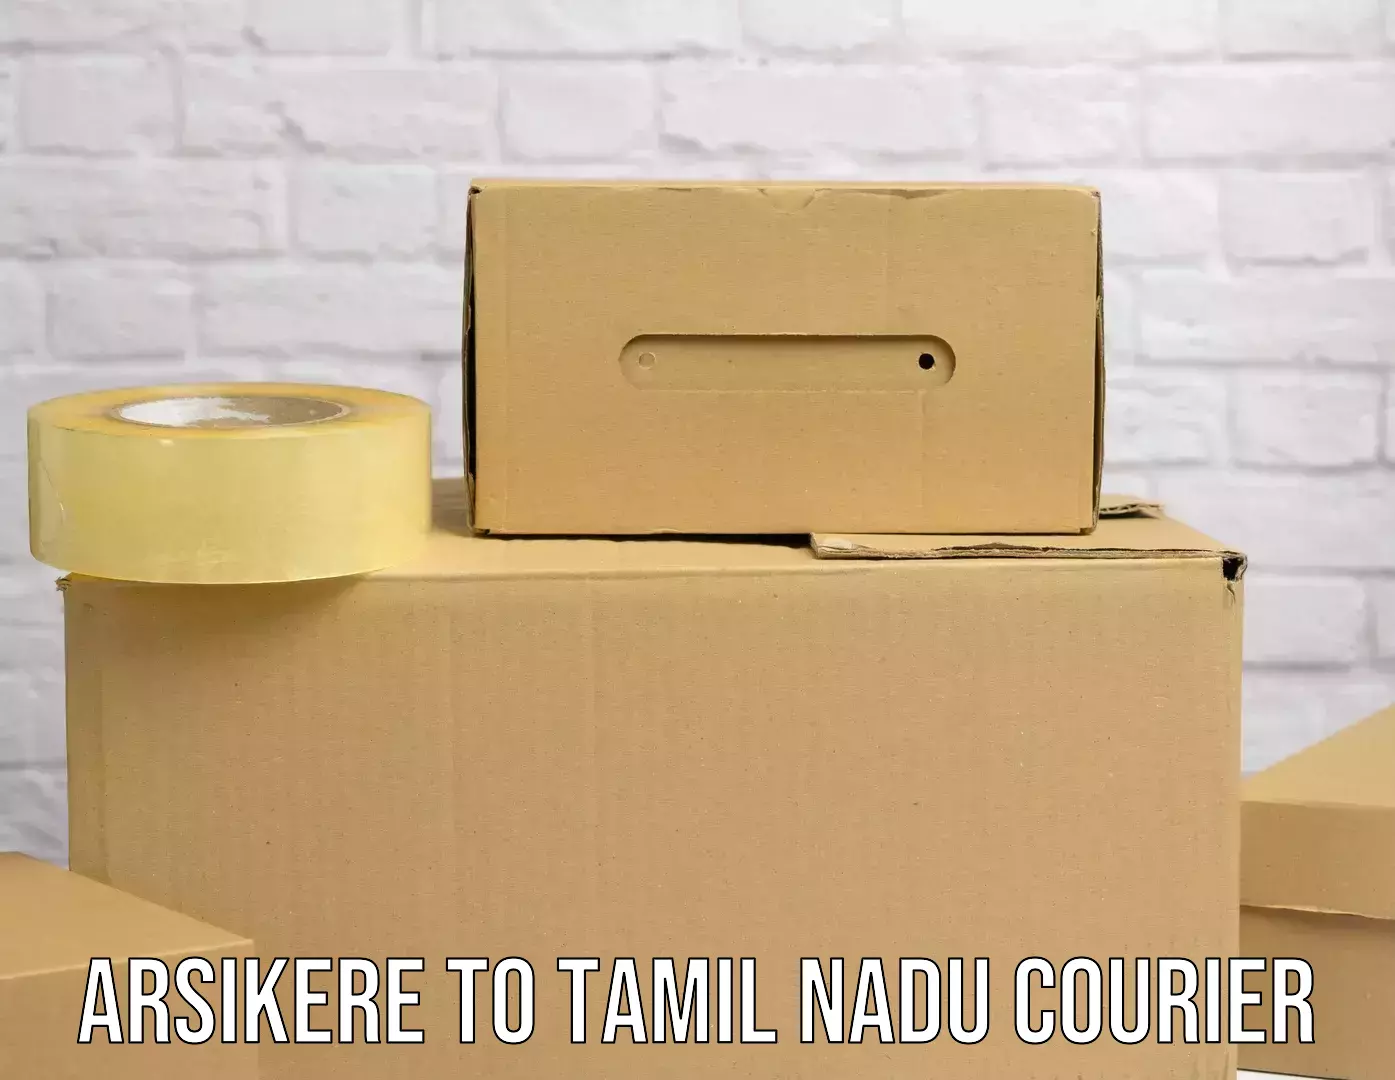 International courier networks Arsikere to Tamil Nadu